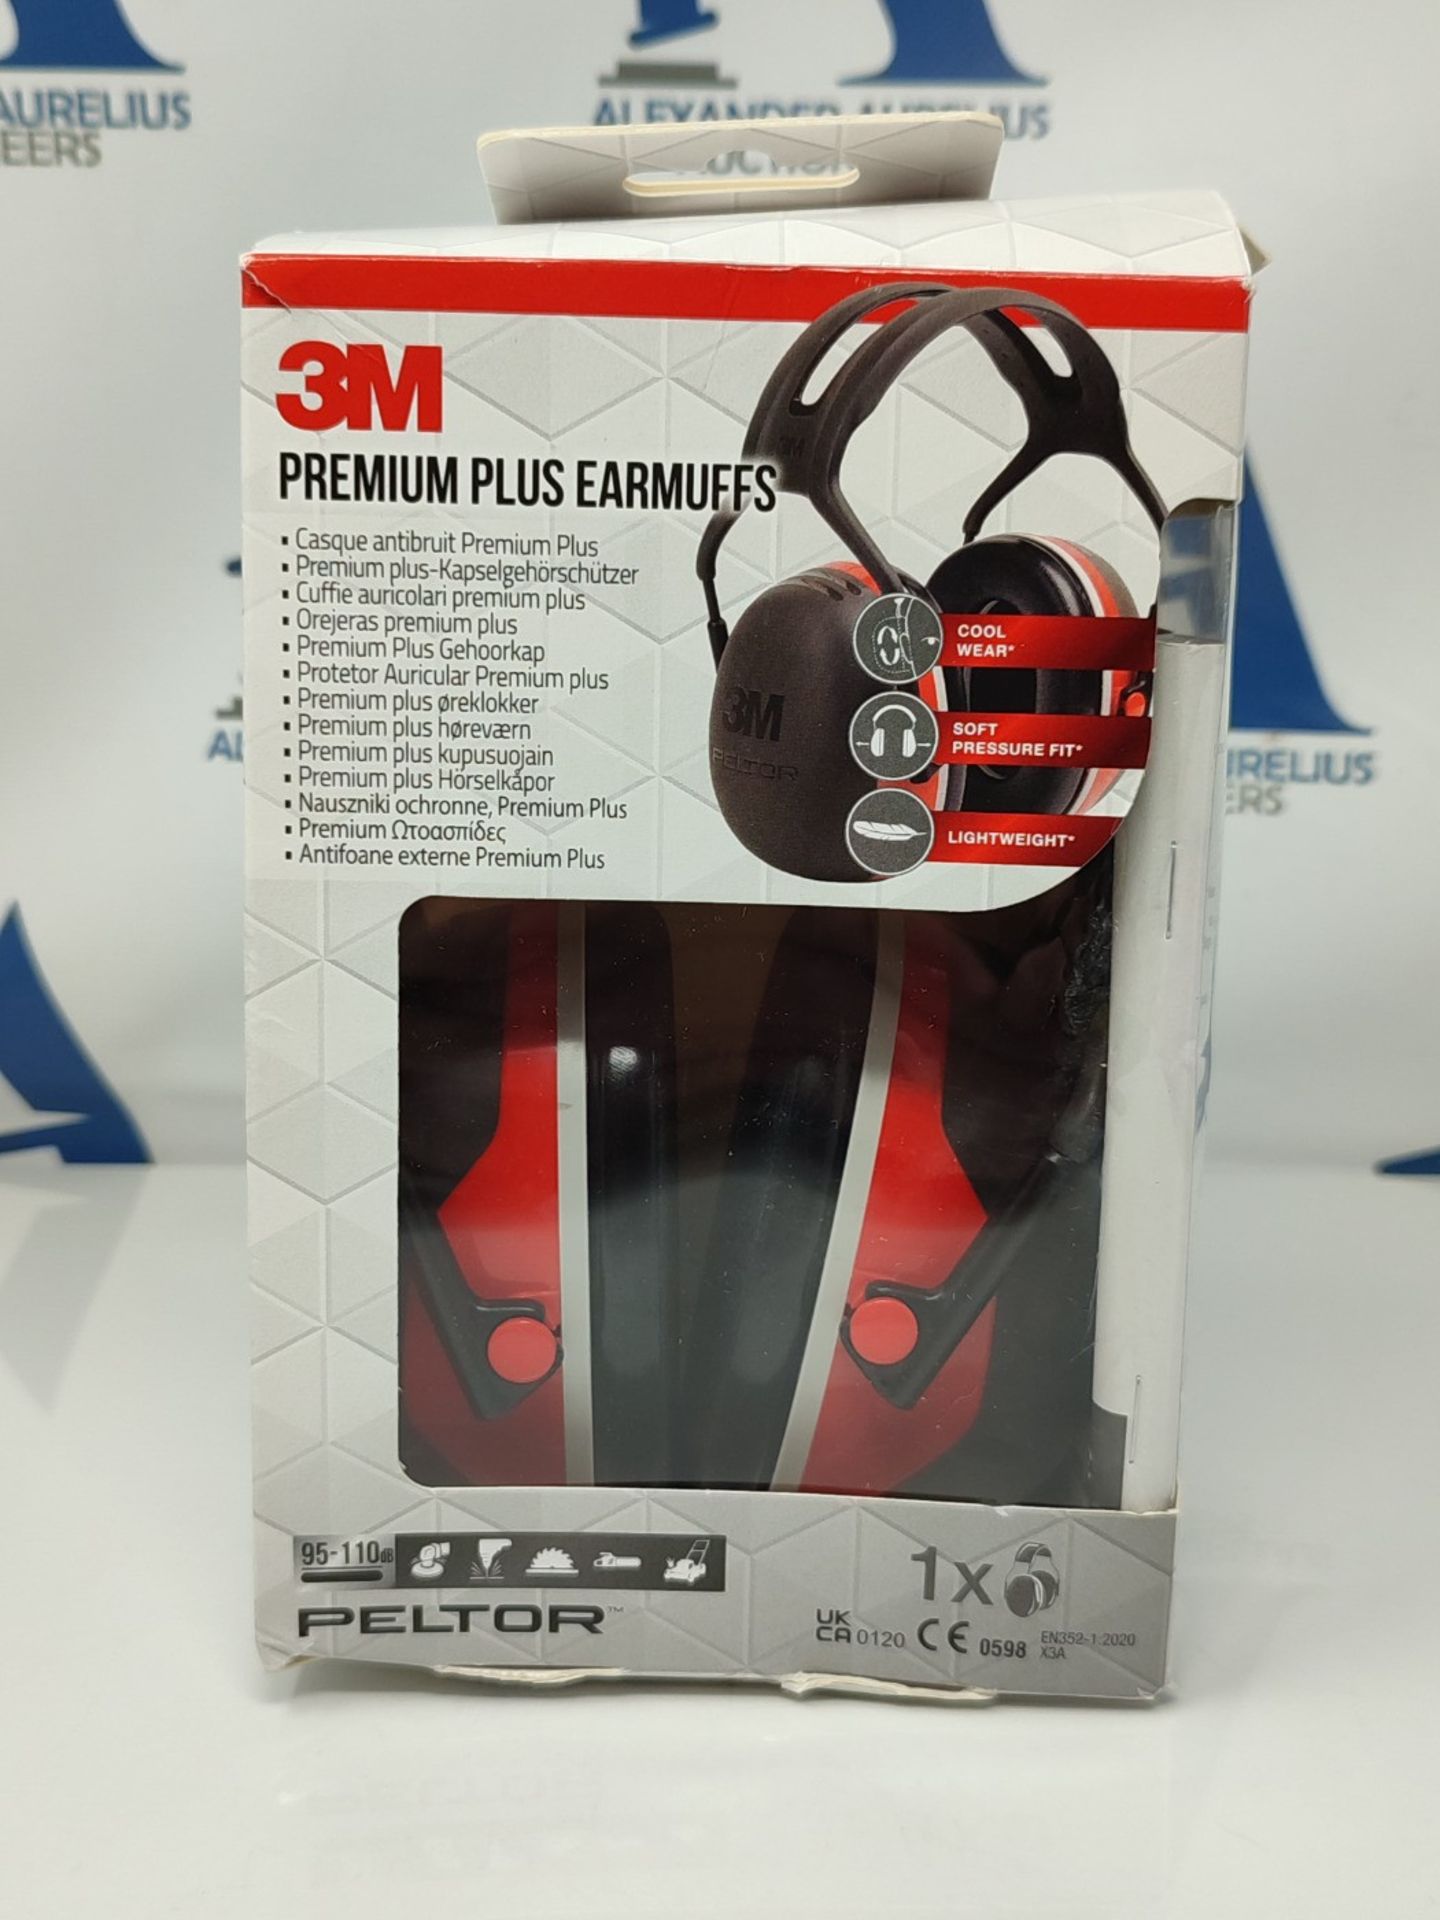 3M Peltor Premium Plus Earmuffs X3A with Headband, Black/Red, 95 - 110 dB - Image 2 of 3